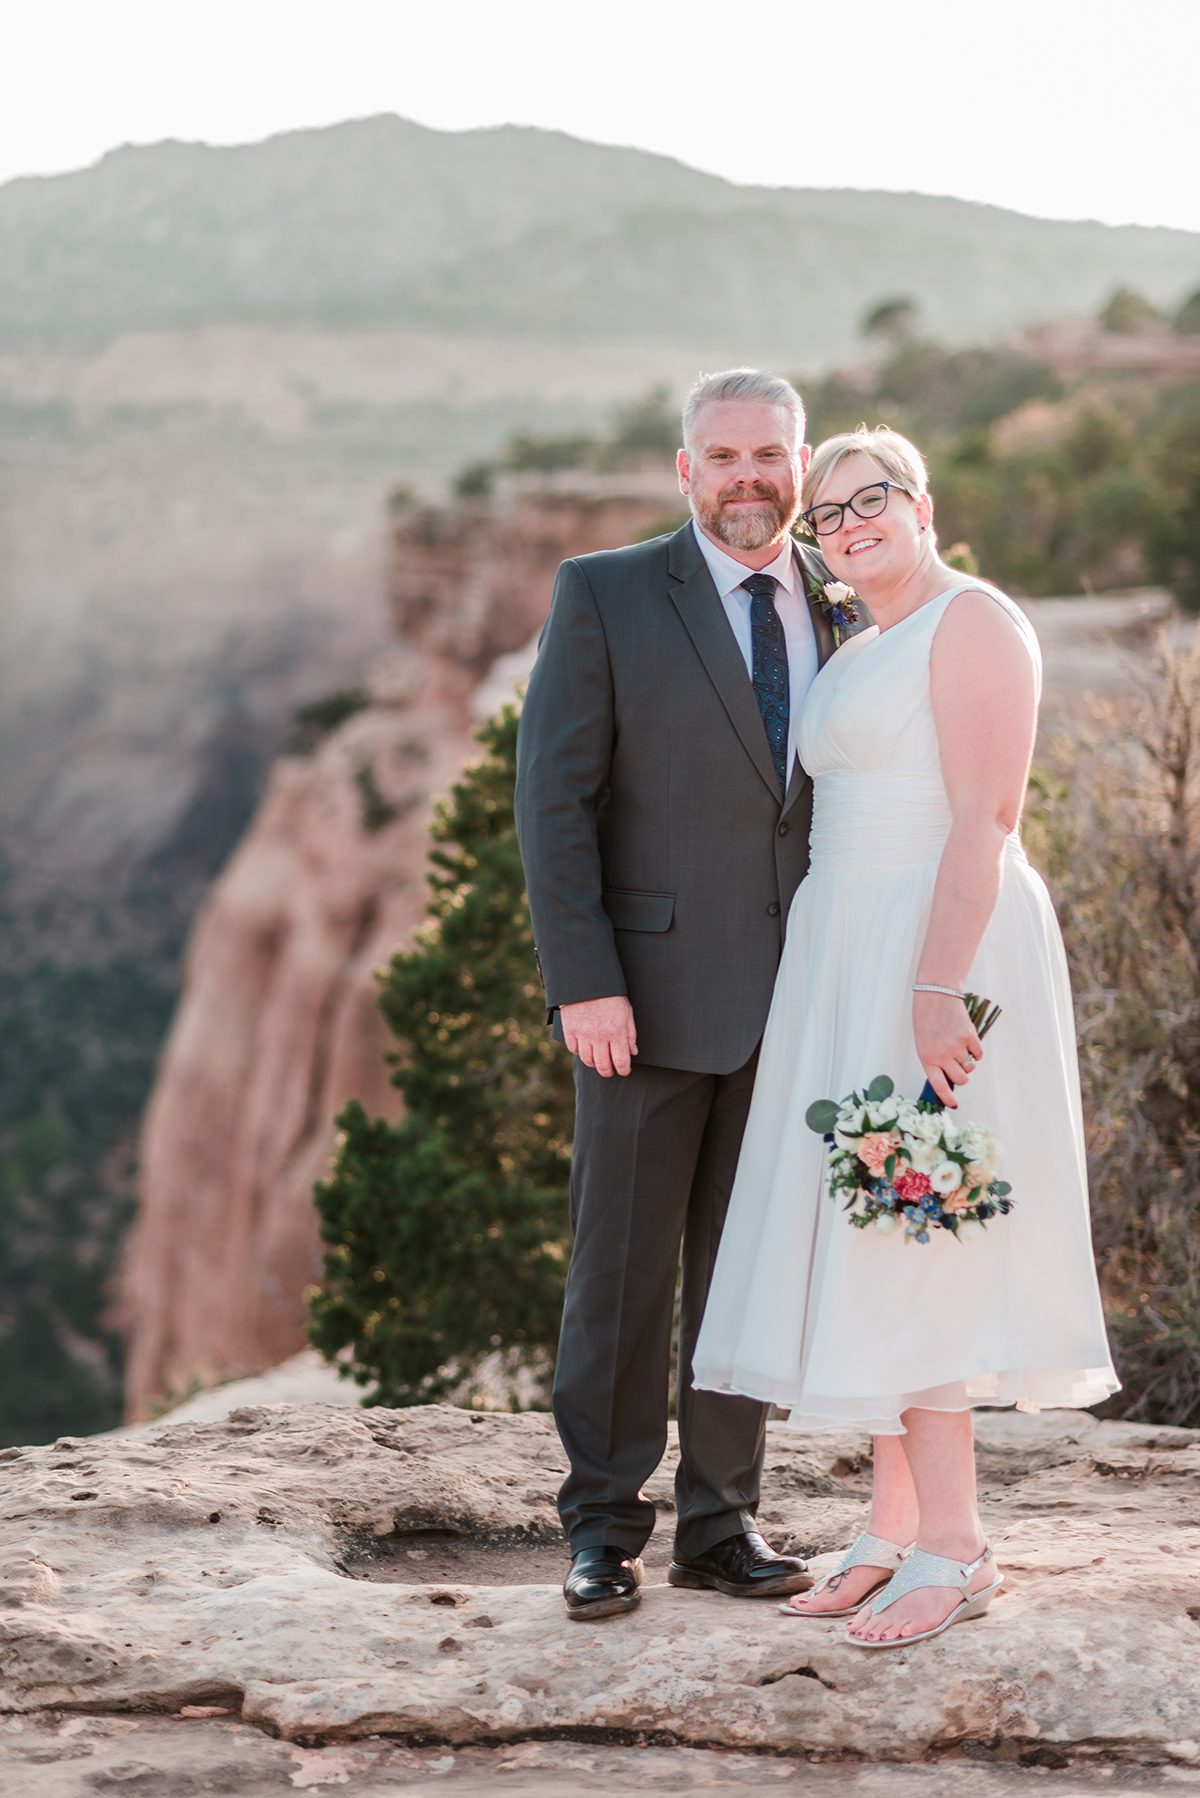 Elizabeth & Josh | Elopement on the Colorado National Monument